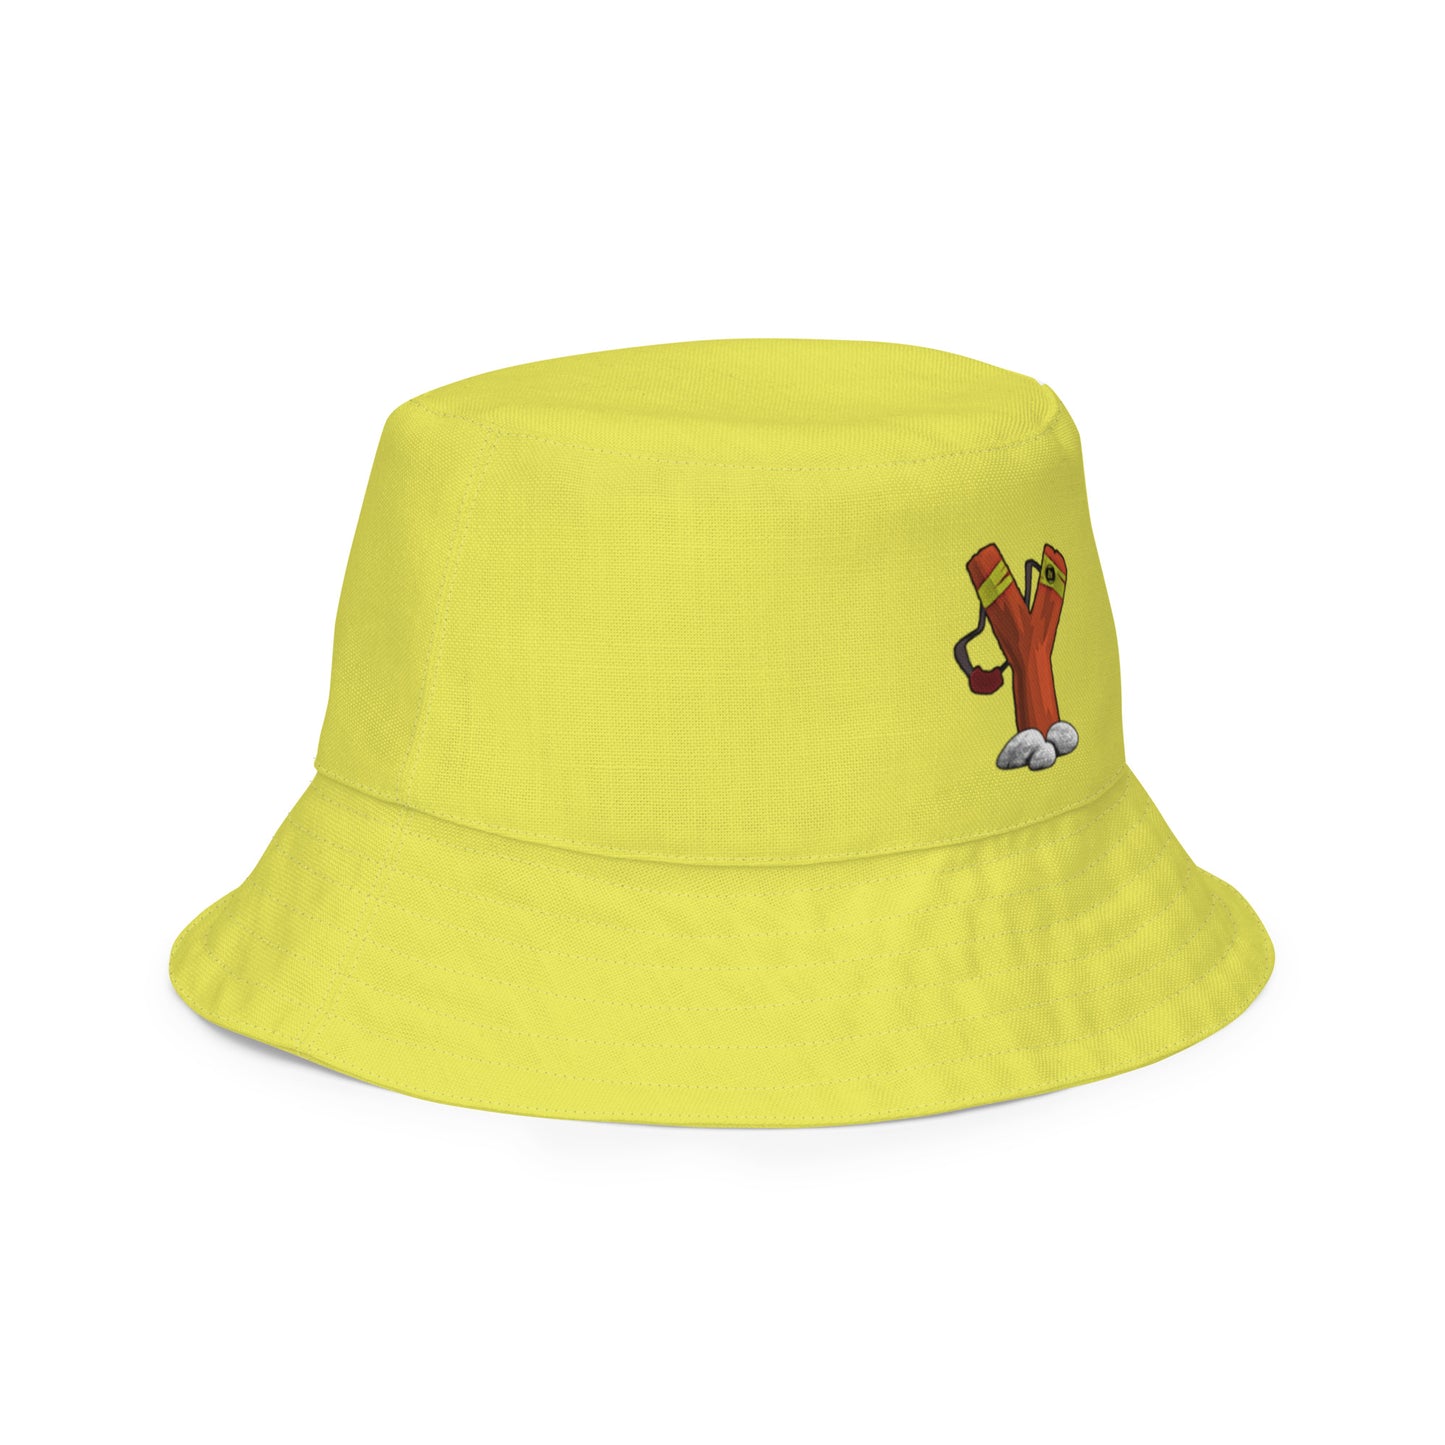 FlyStrate bucket hat (yellow)